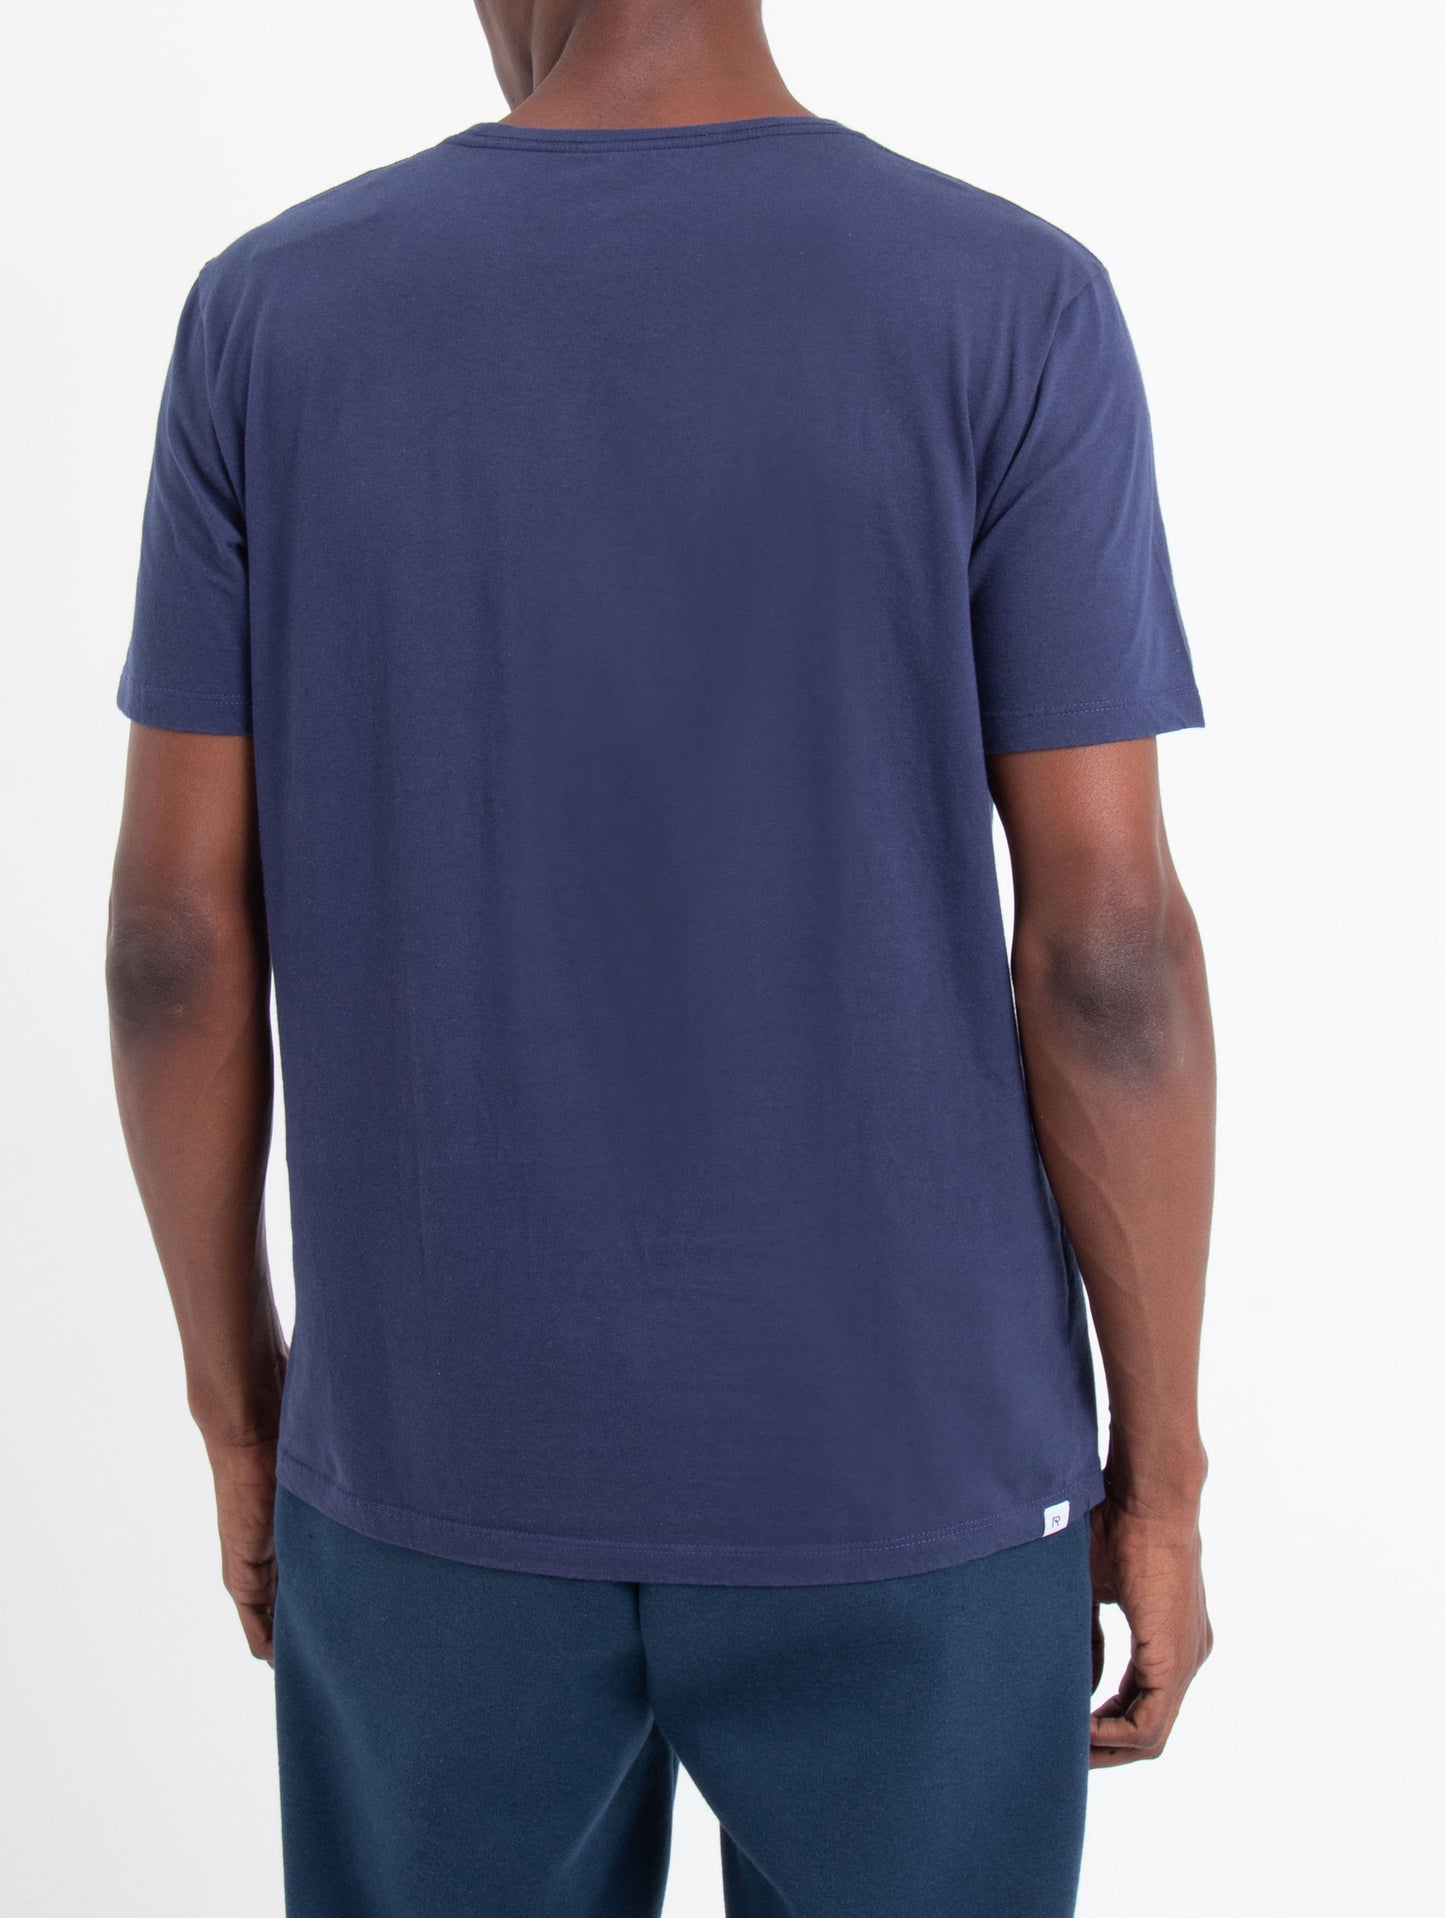 T-Shirt Cânhamo - Azul